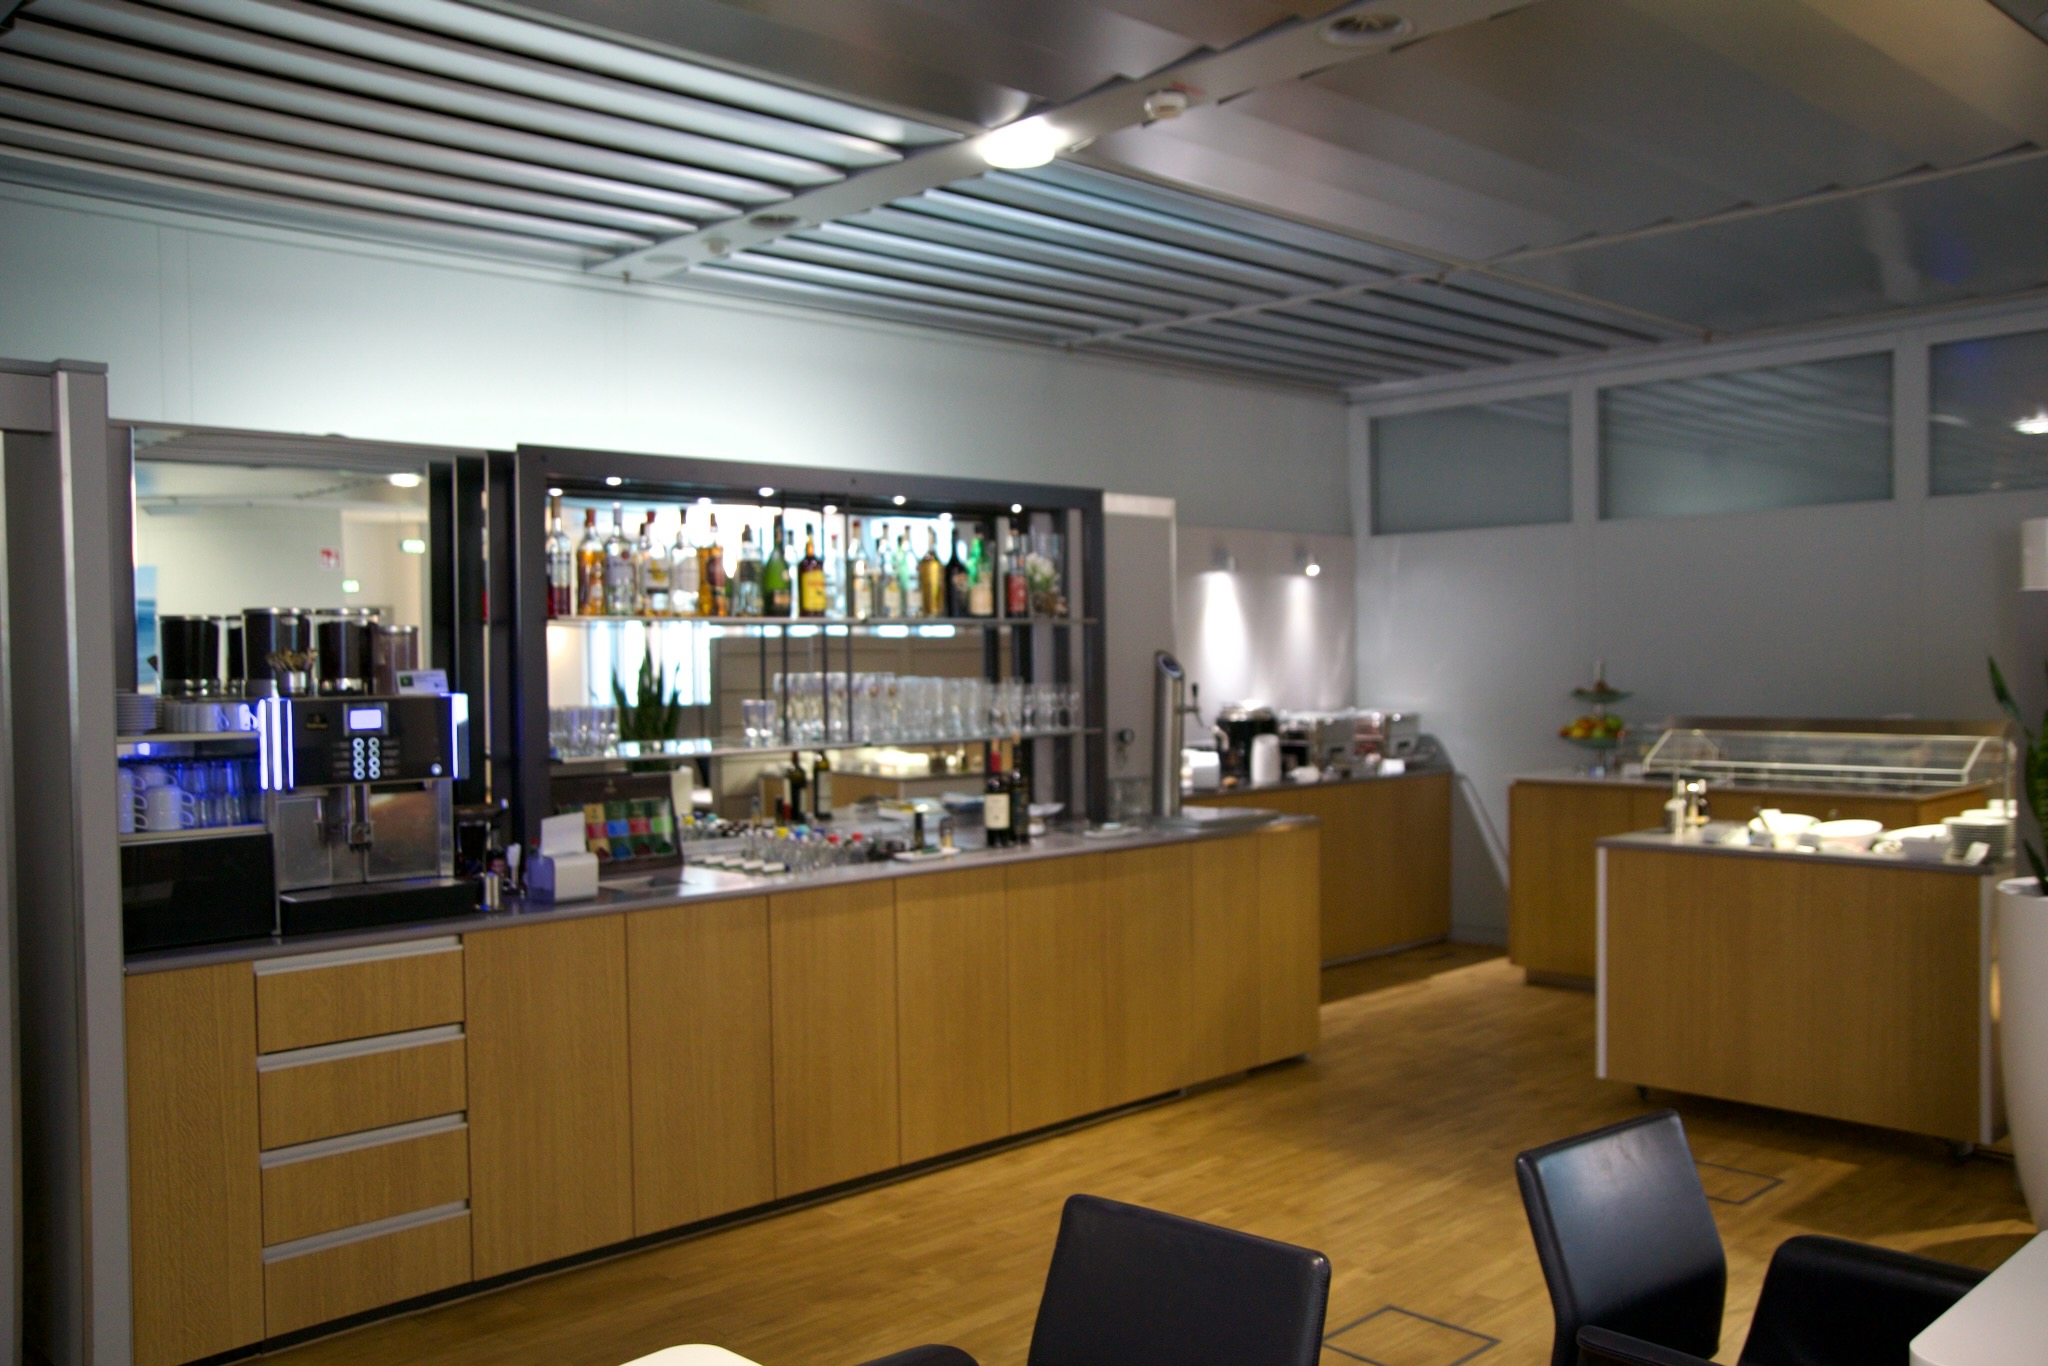 Lufthansa Senator Lounge Nürnberg – Angebot an Speisen & Getränken (entschuldigt den miserablen Fokus)